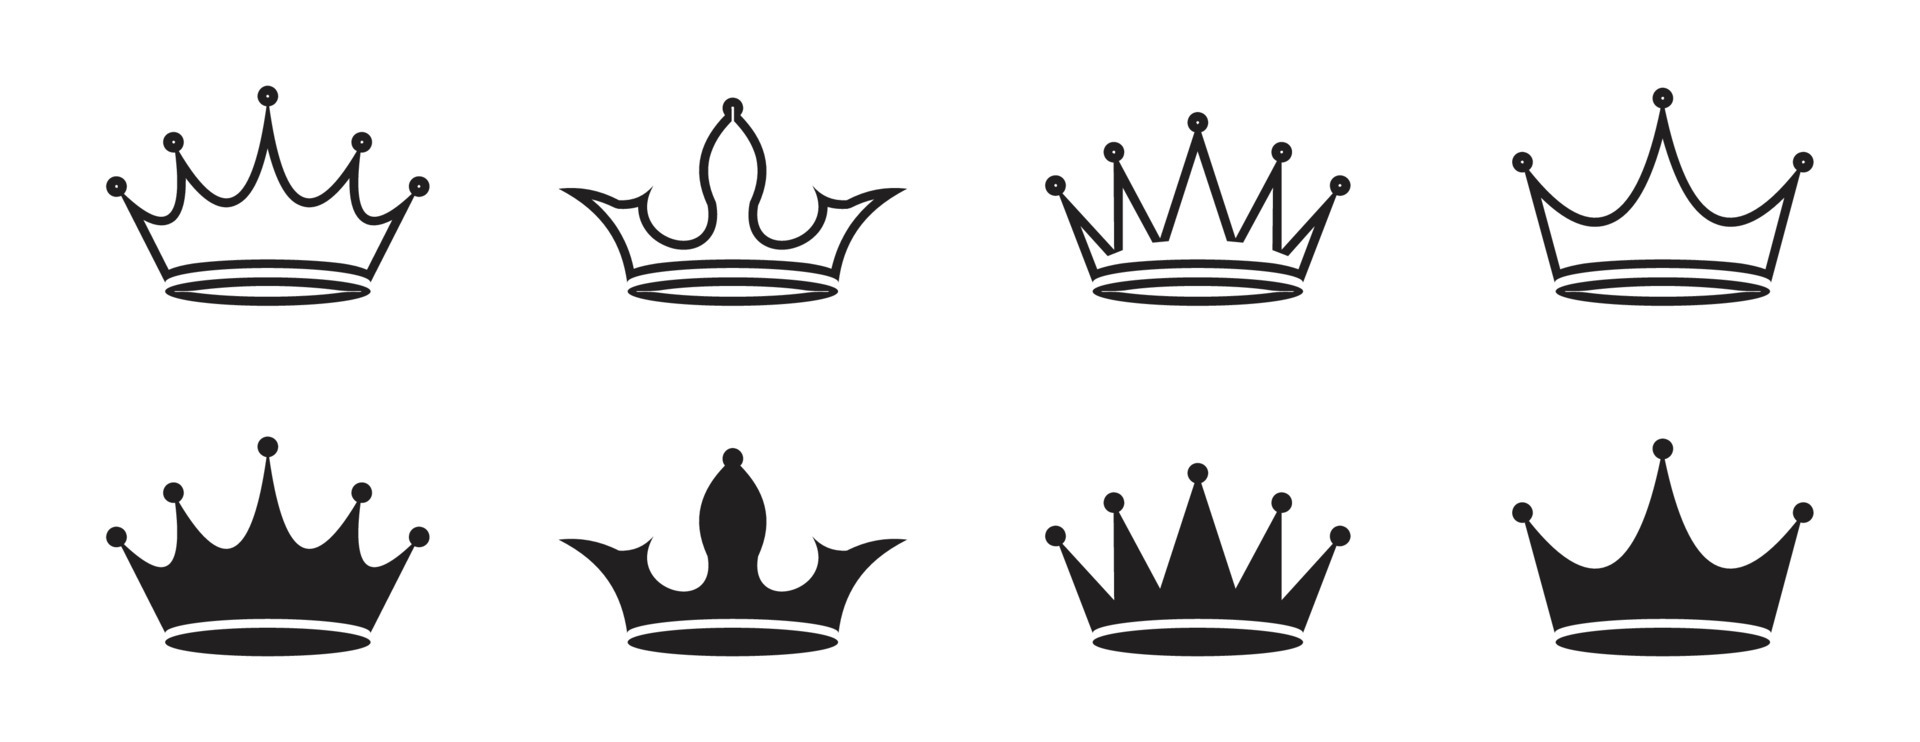 символы корона пубг фото 53